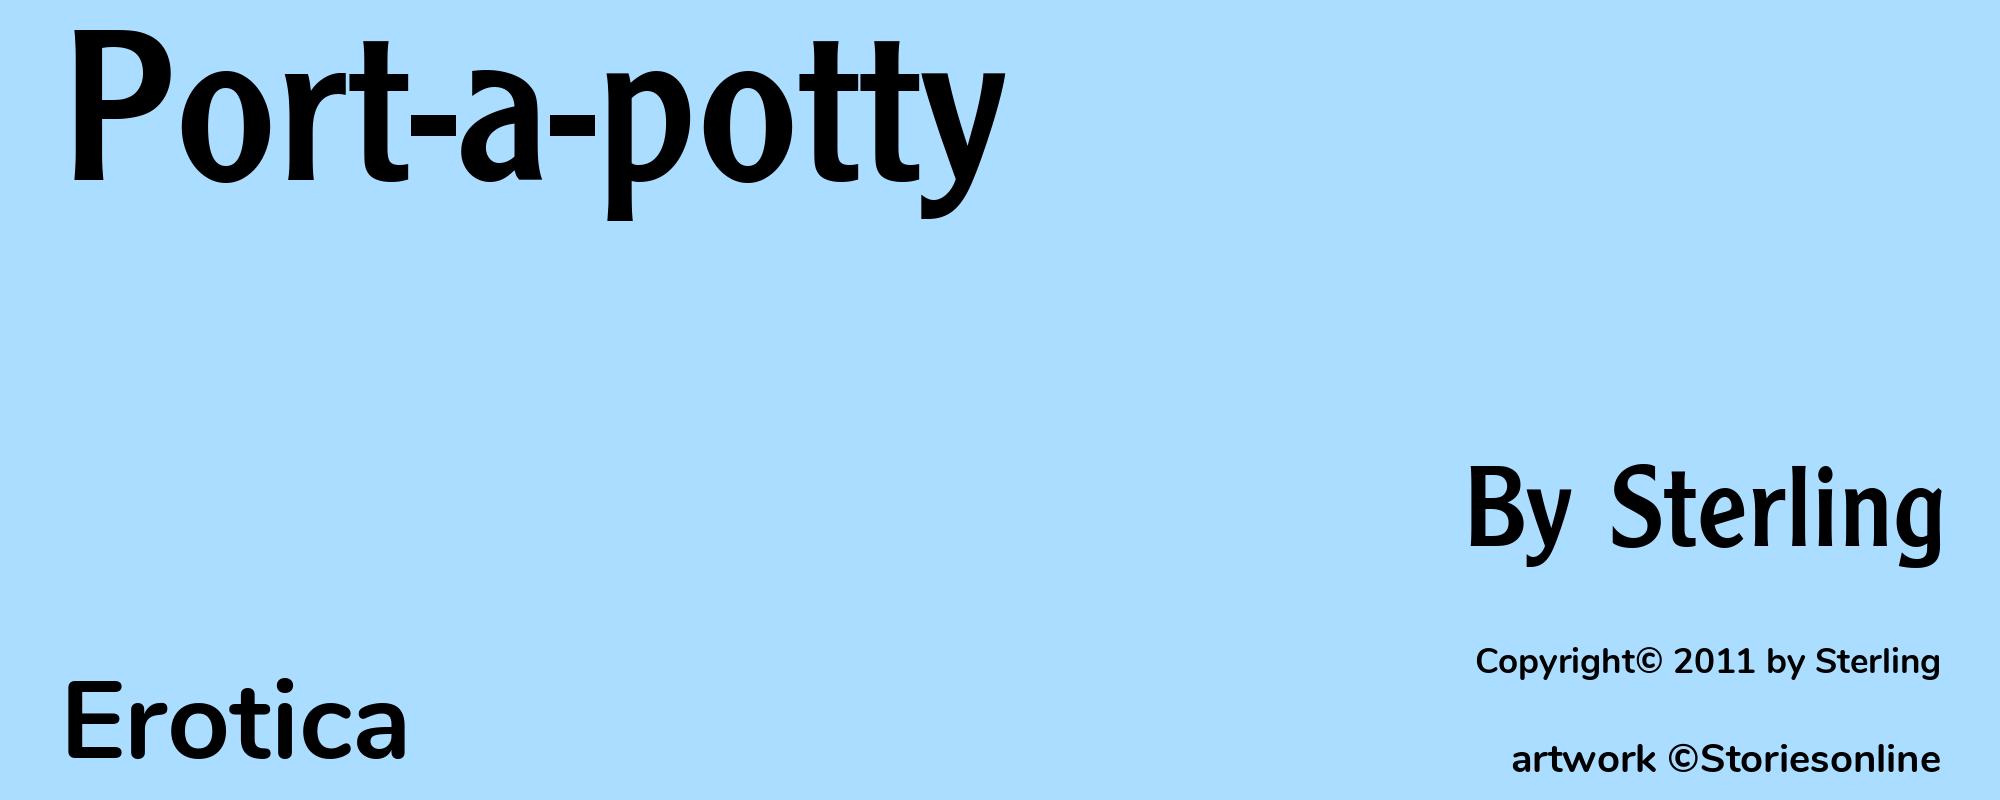 Port-a-potty - Cover